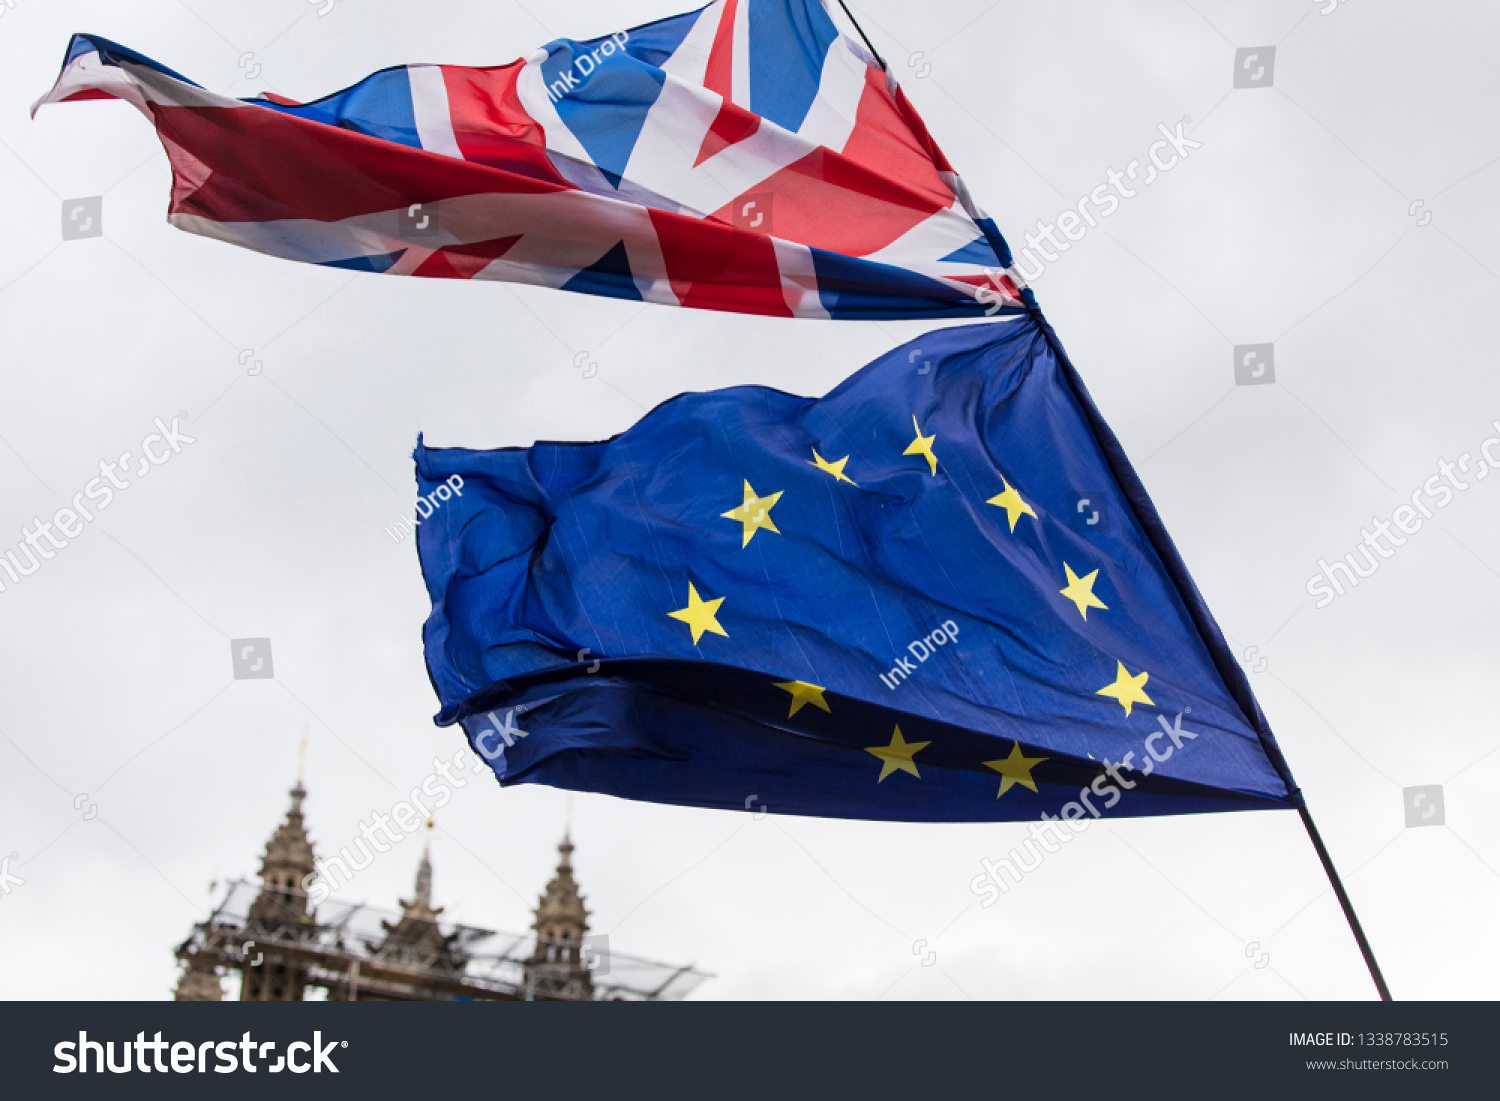 European Union and British Union Jack flag flying together.  #1338783515